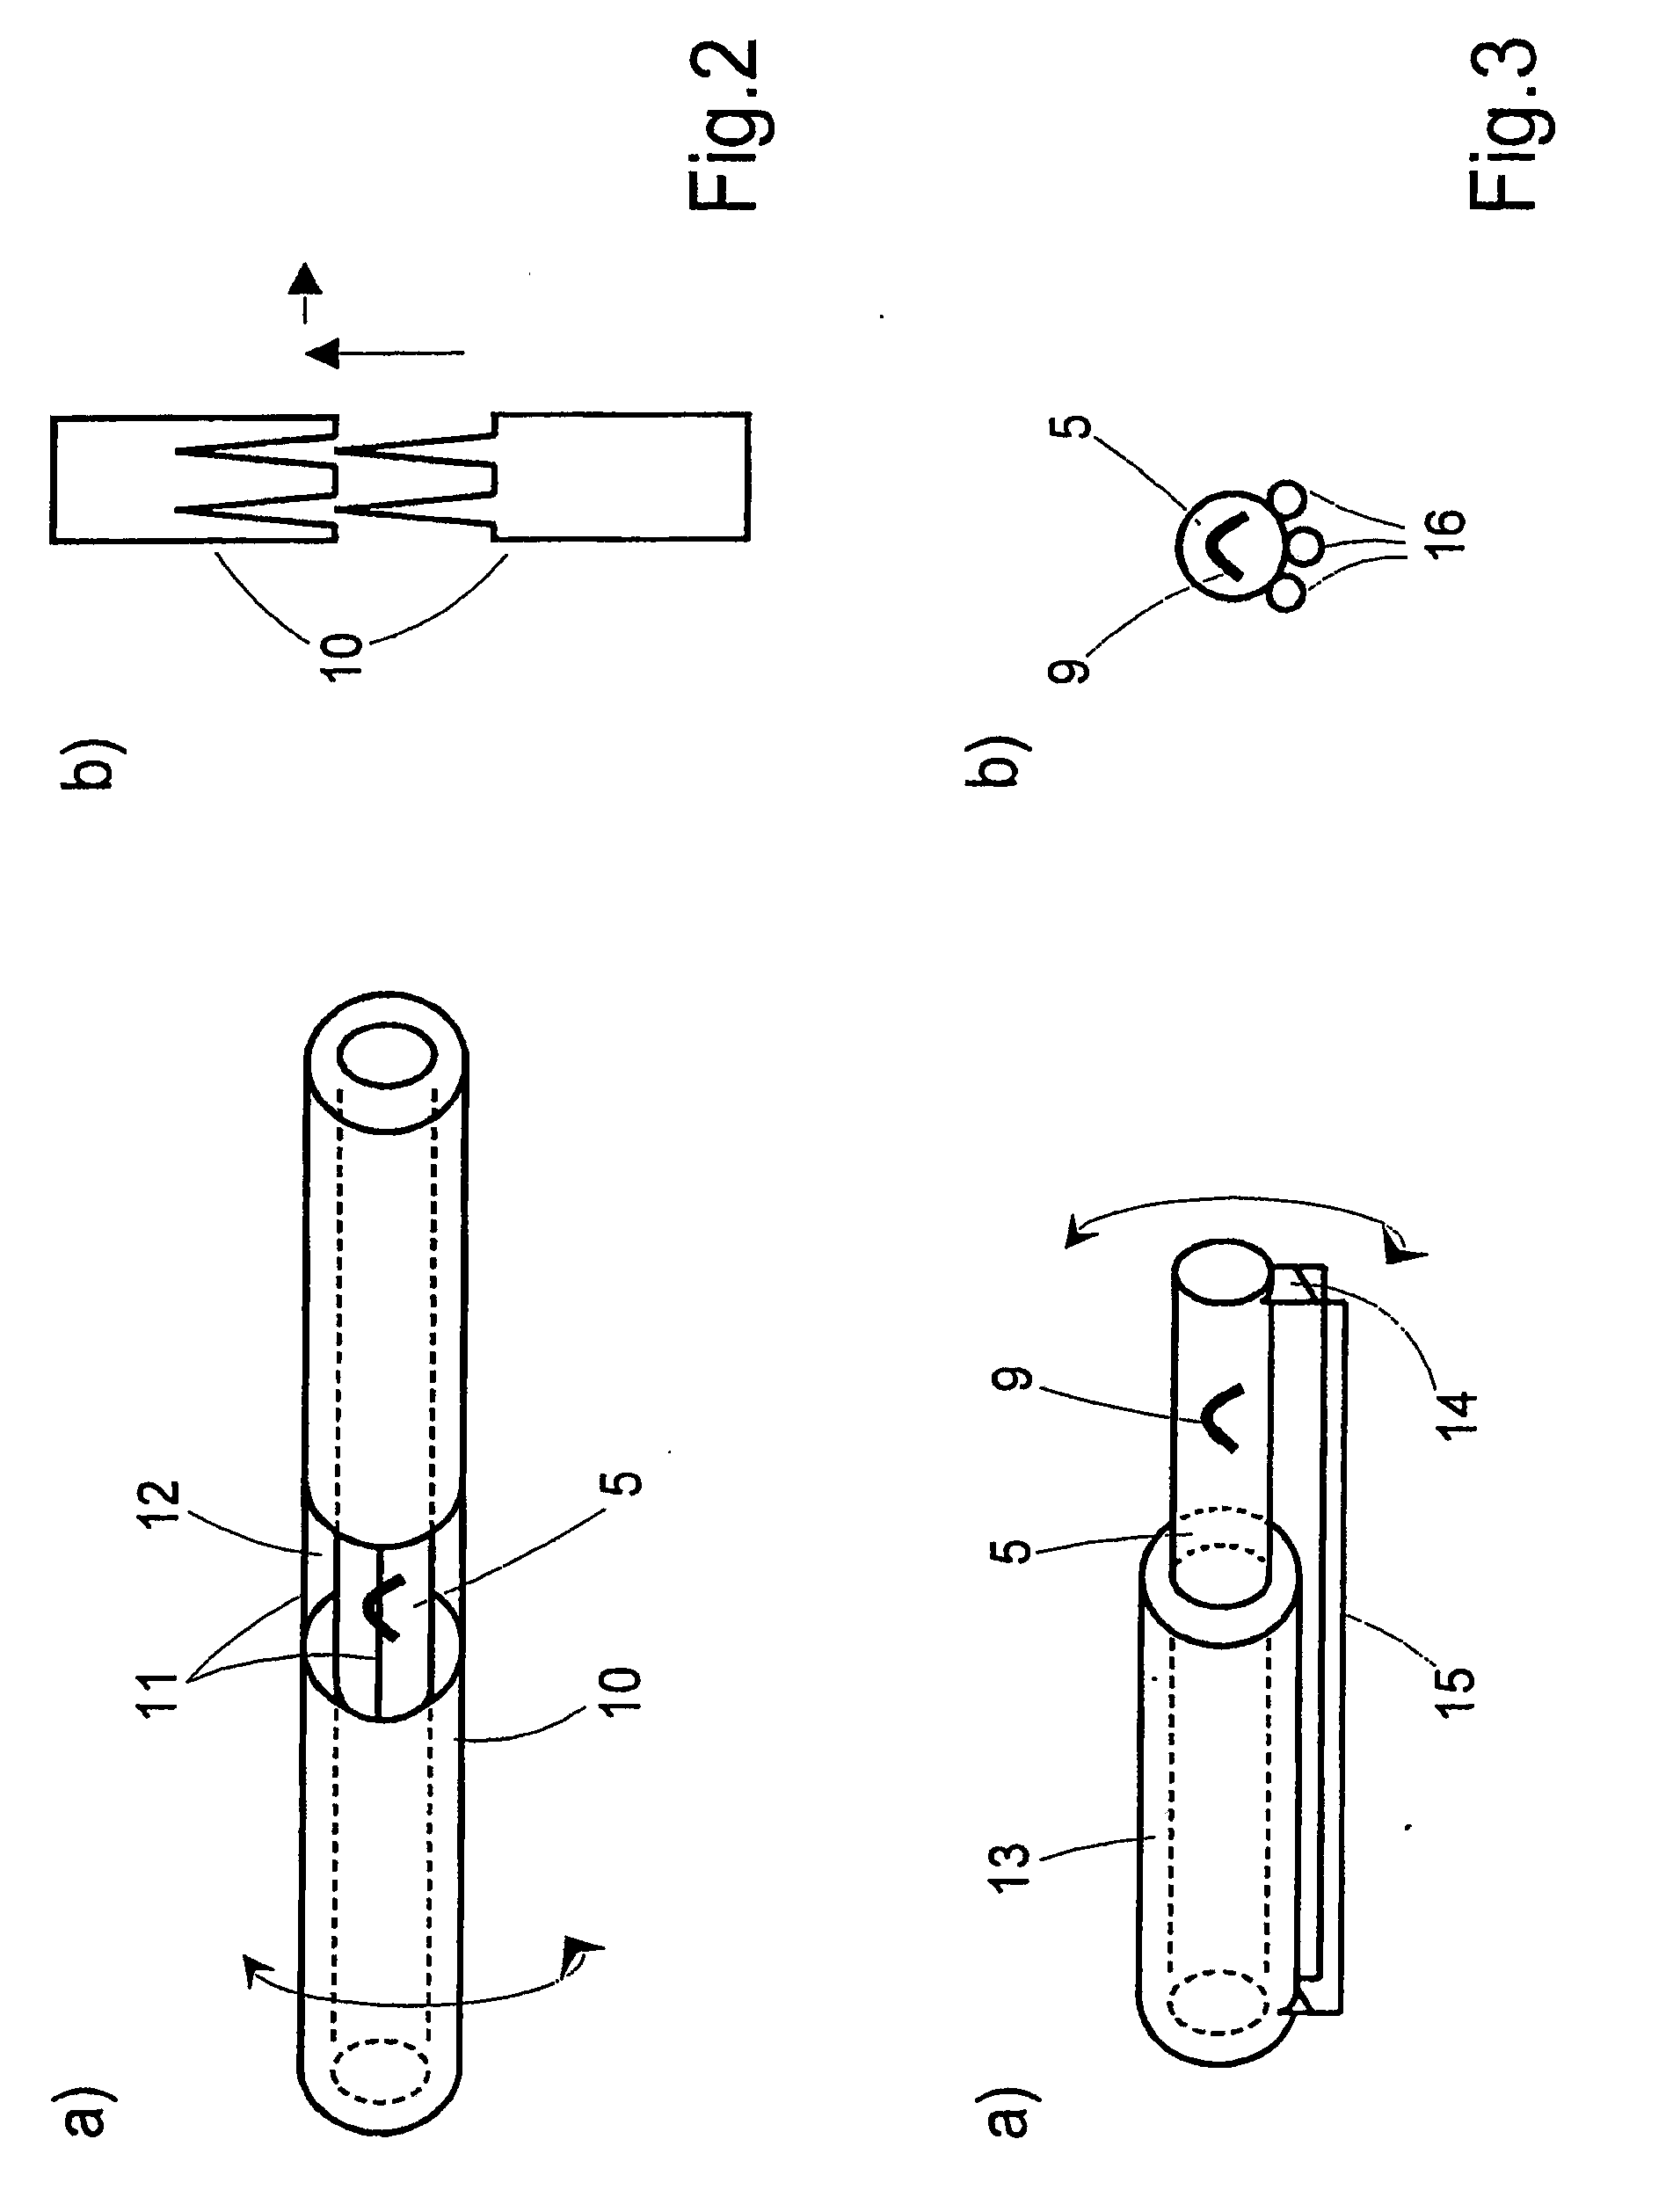 Sample holder for a microscope